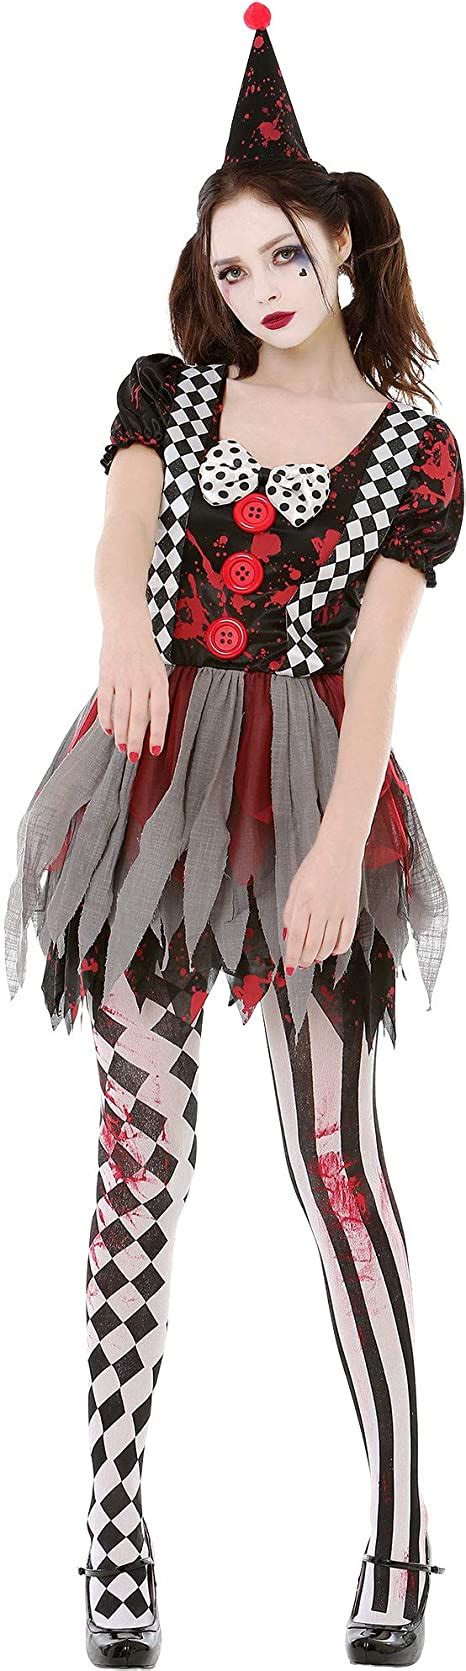 Crazy Clown Halloween Costume Creepy Circus Girl Dress